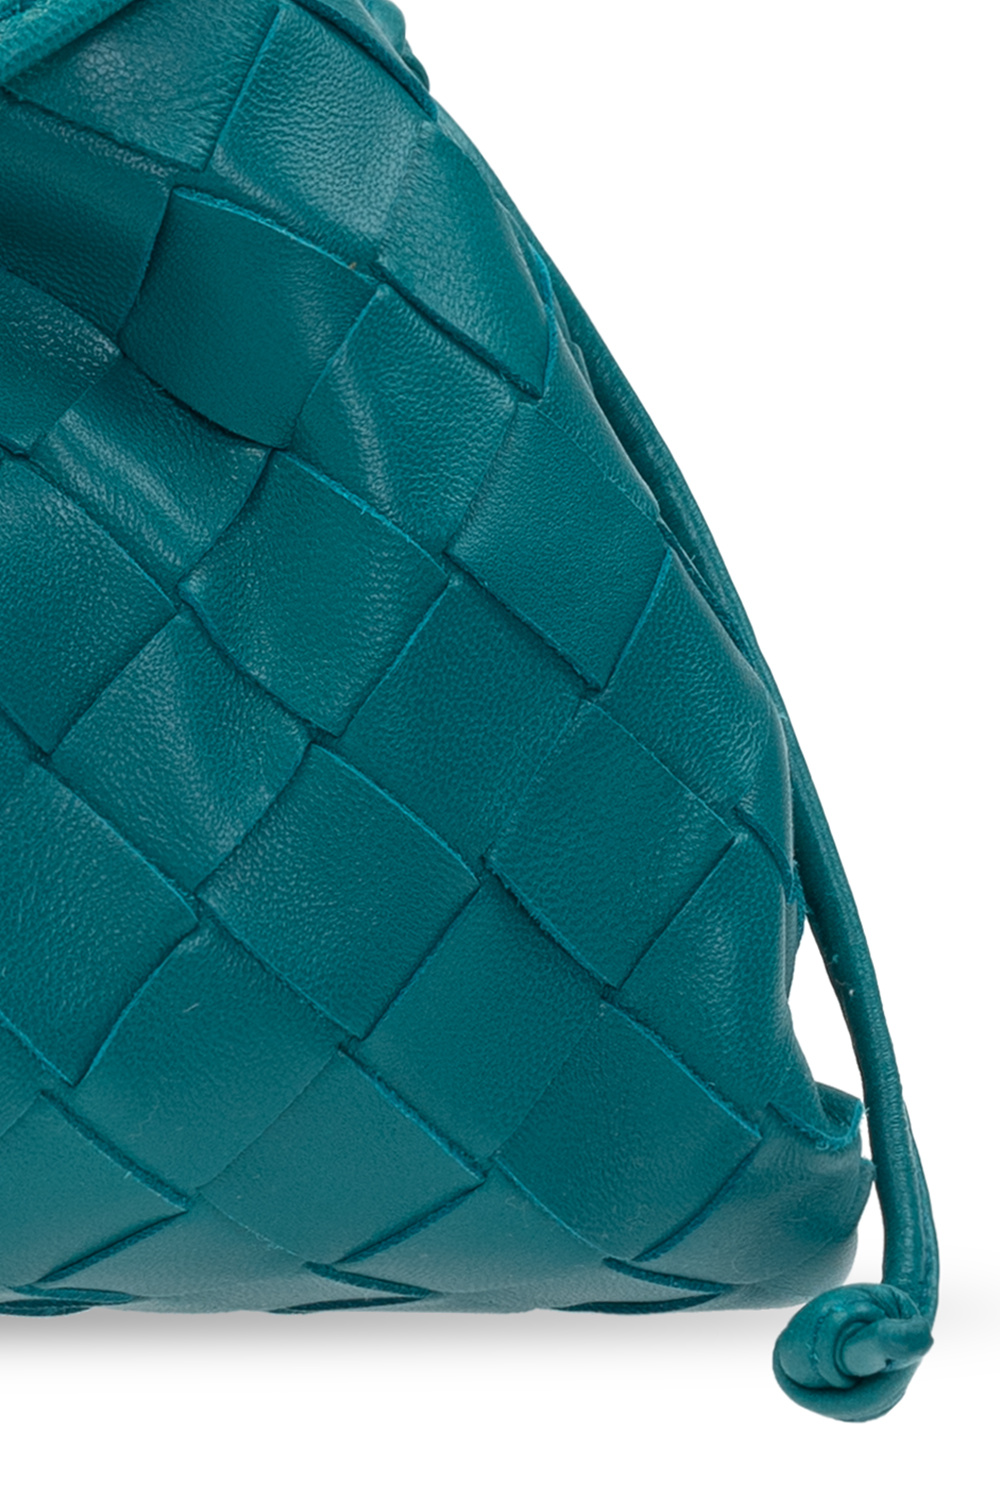 BOTTEGA-VENETA-Intrecciato-Leather-Shoulder-Bag-Light-Green-115653